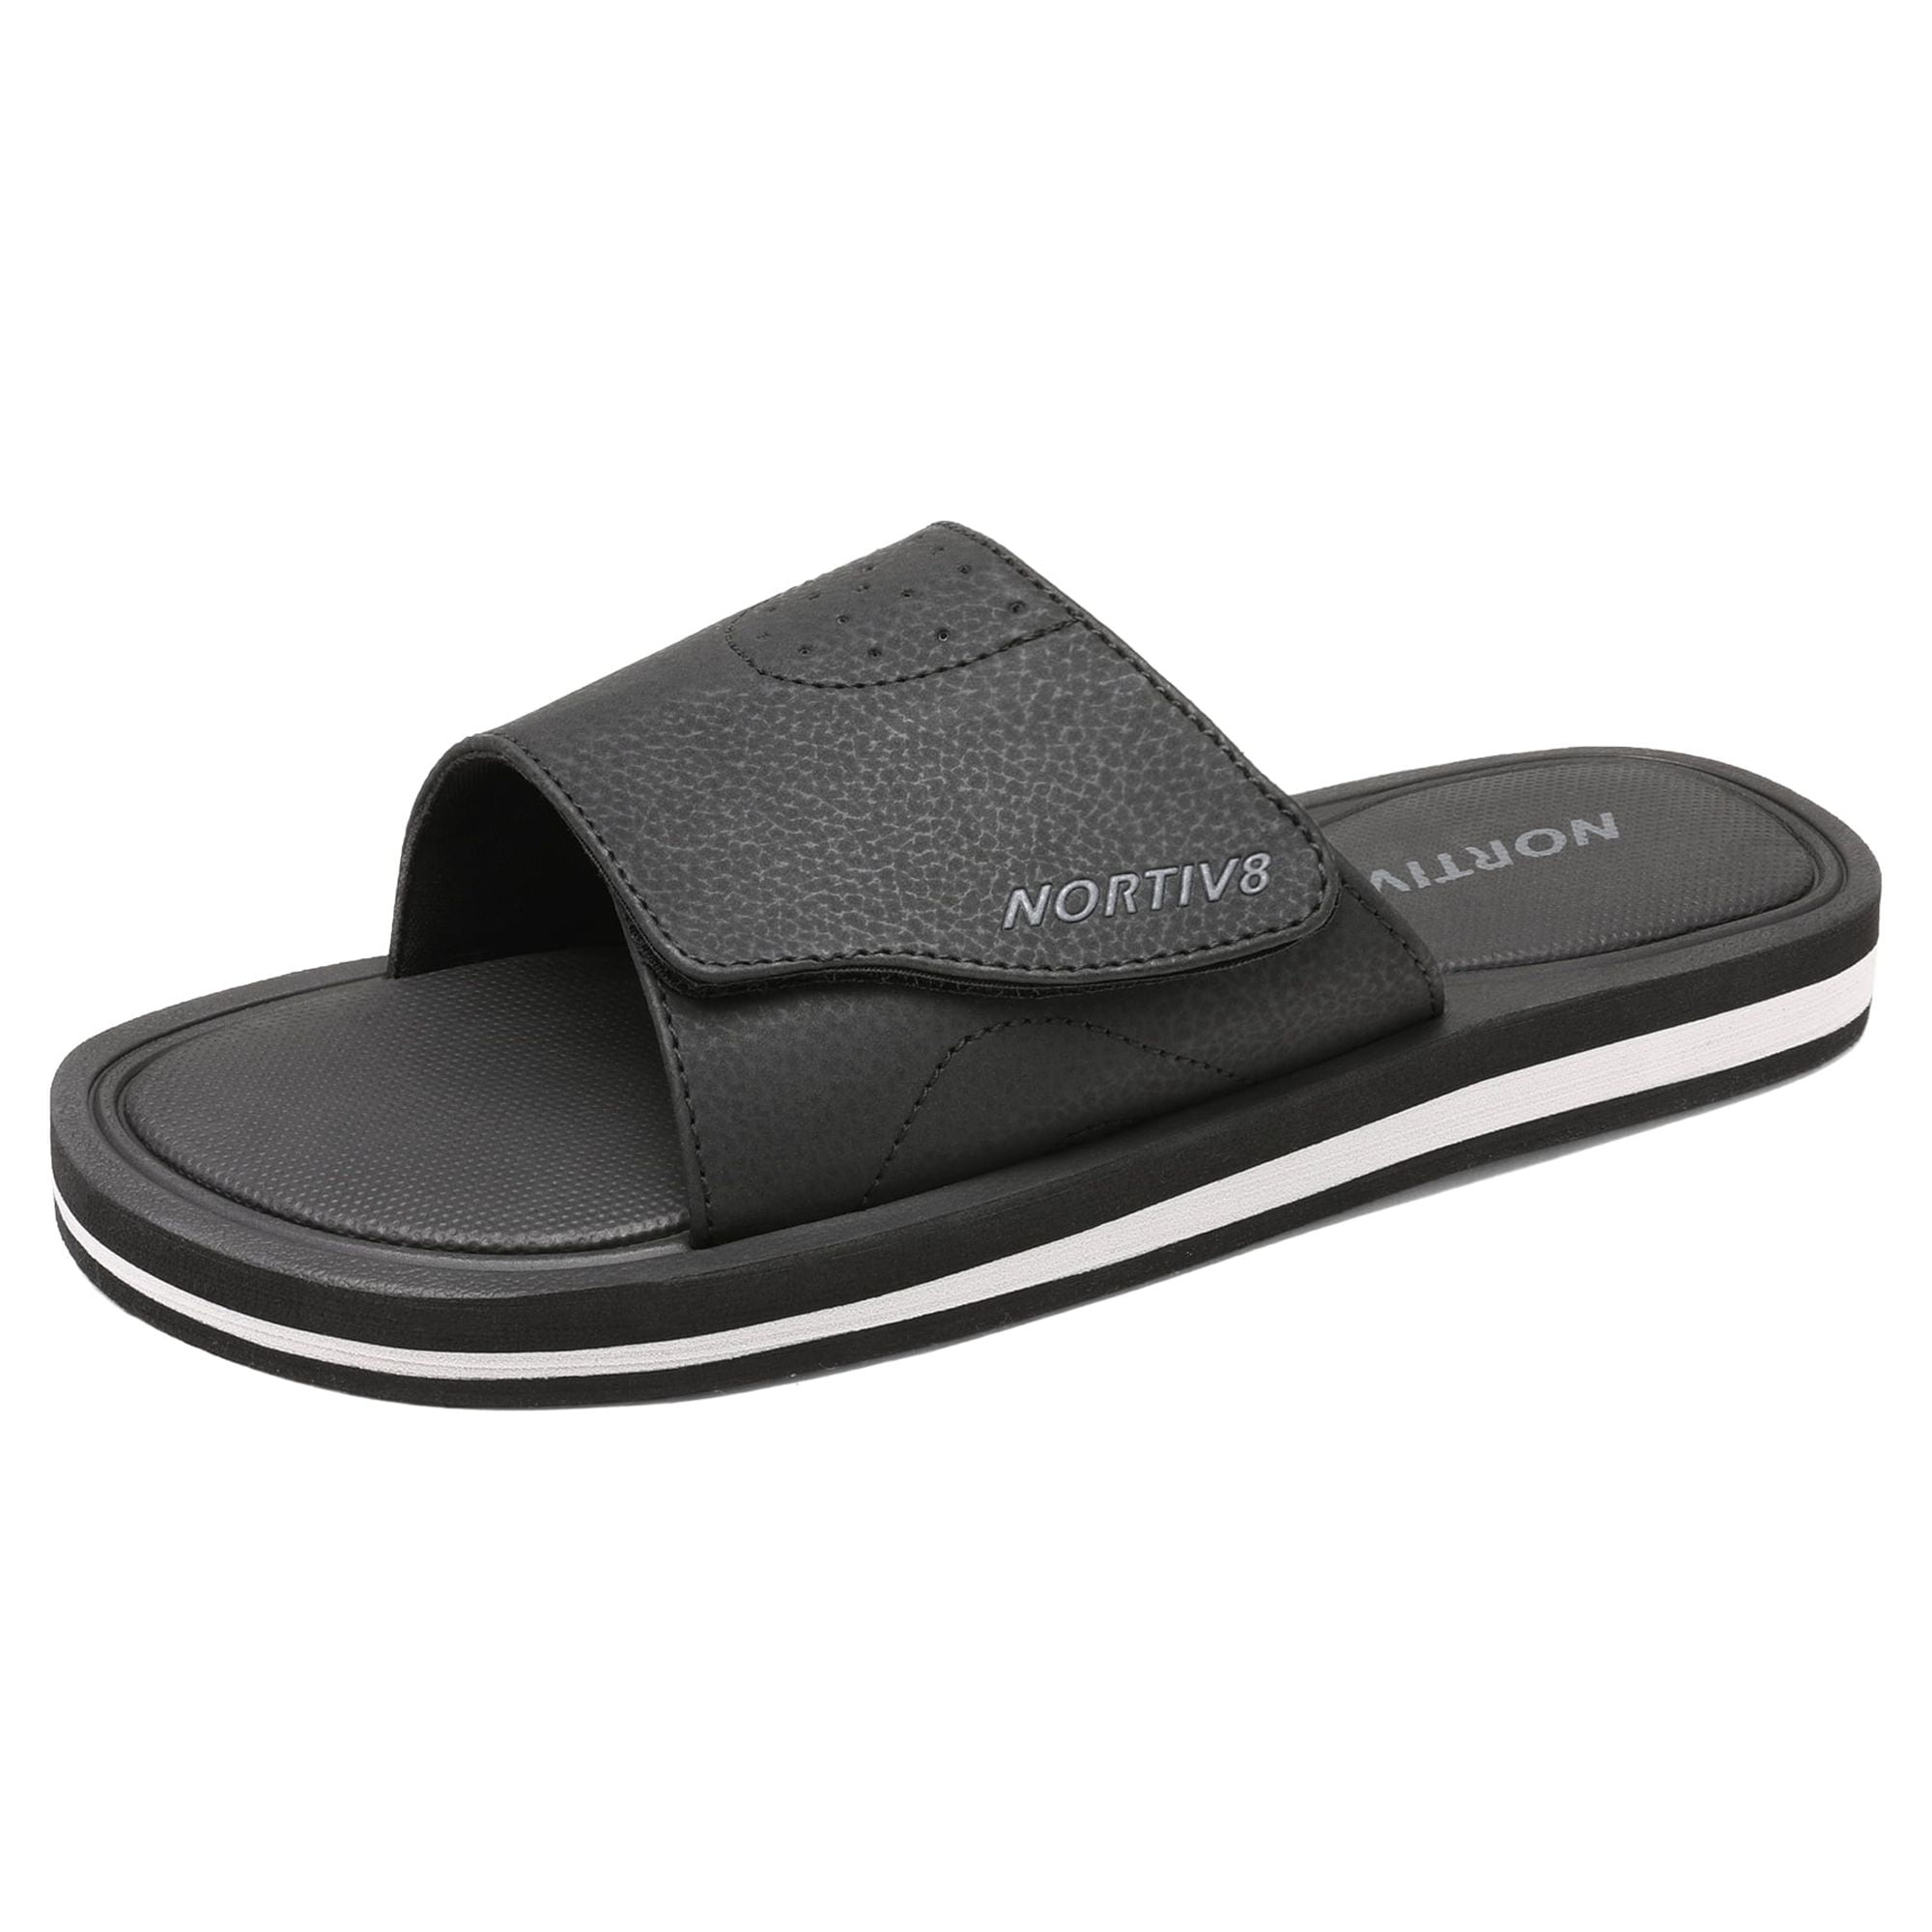 Nortiv8 Men's Memory Foam Adjustable Slide Sandals Comfort Lightweight  Summer Beach Sandals Shoes FUSION BLACK Size 7 